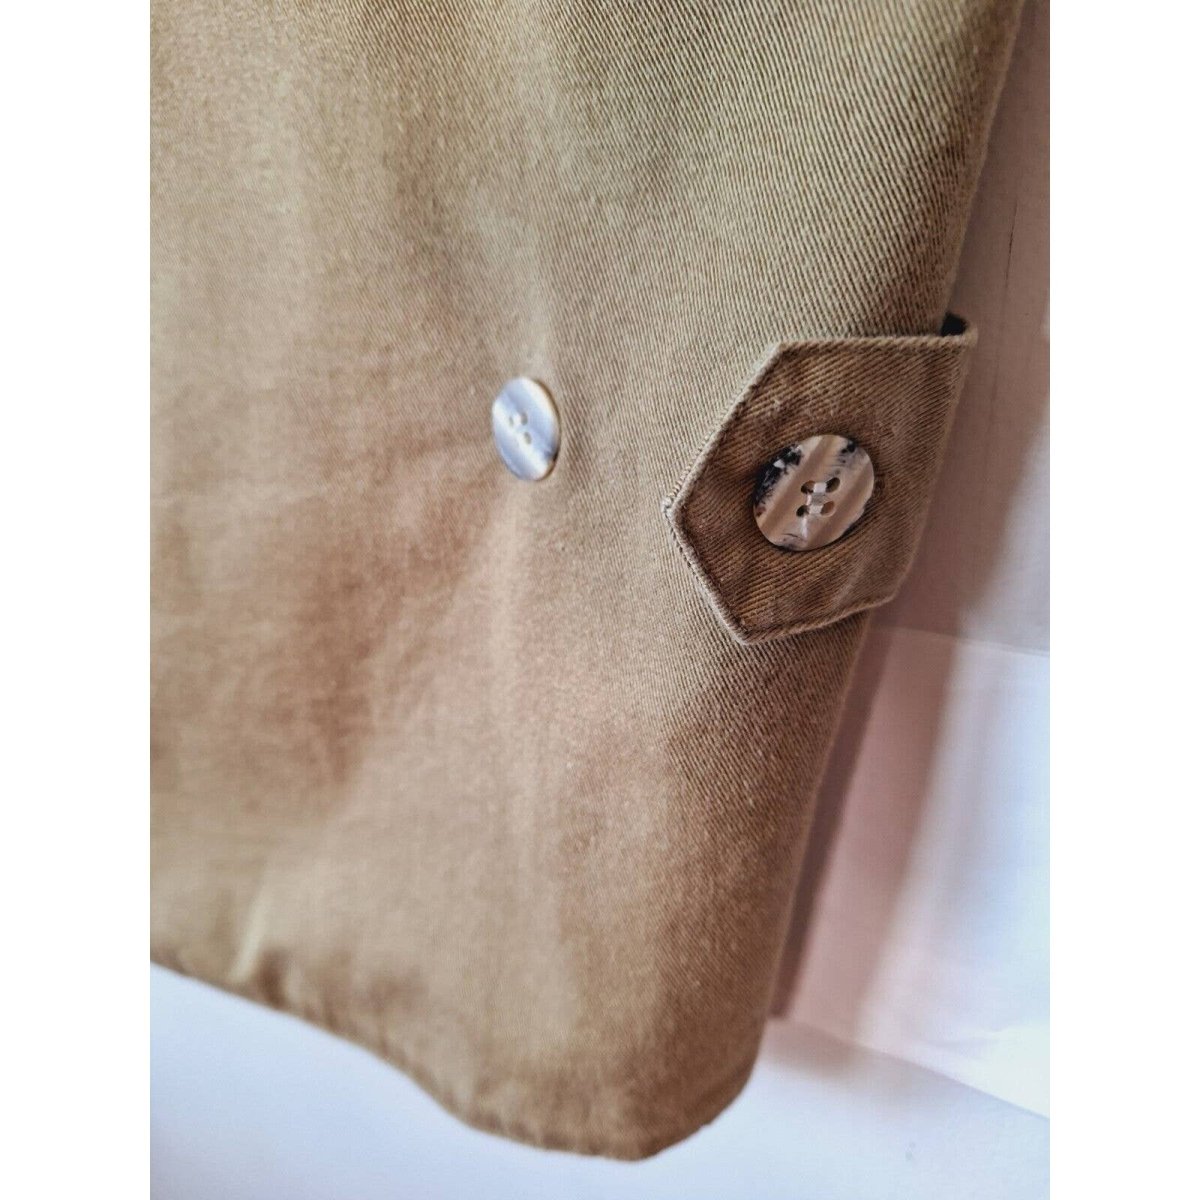 Vintage 80s/90s Olive/ Khaki Wool Blend 6 Button Vest Size Men XL - themallvintage The Mall Vintage